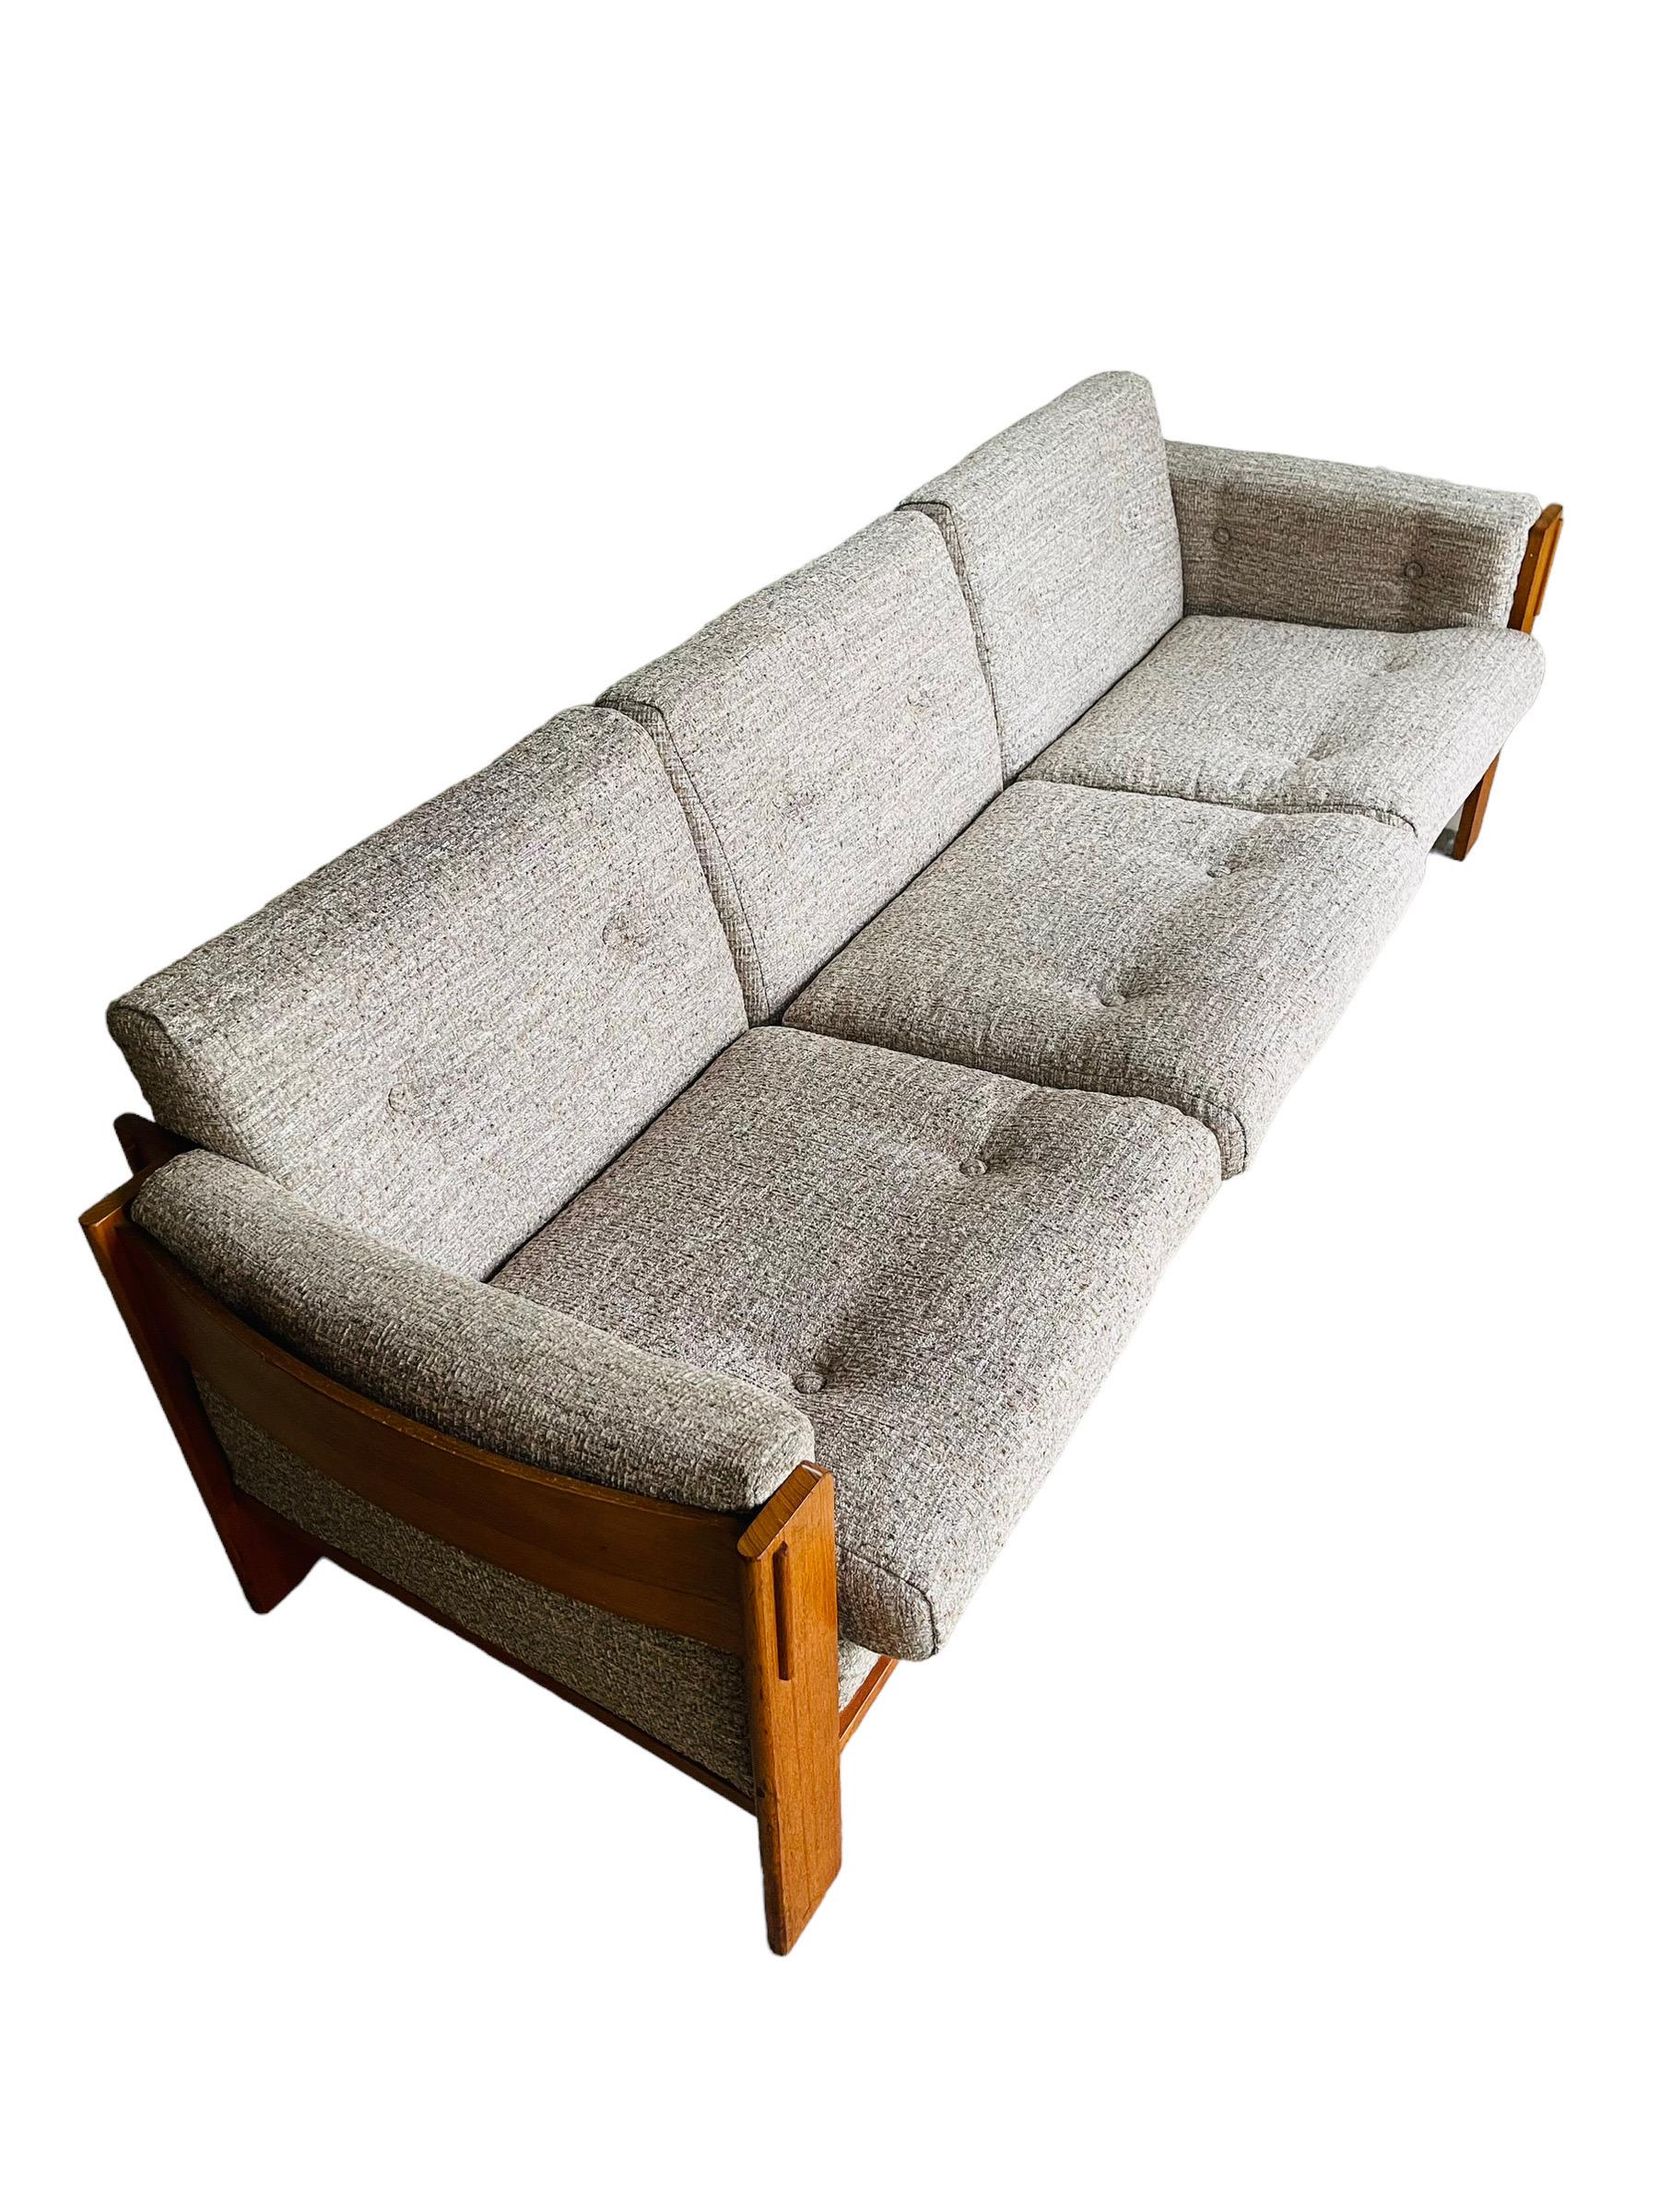 20th Century Danish Modern Teak Sofa by Jydsk Moholvaerk